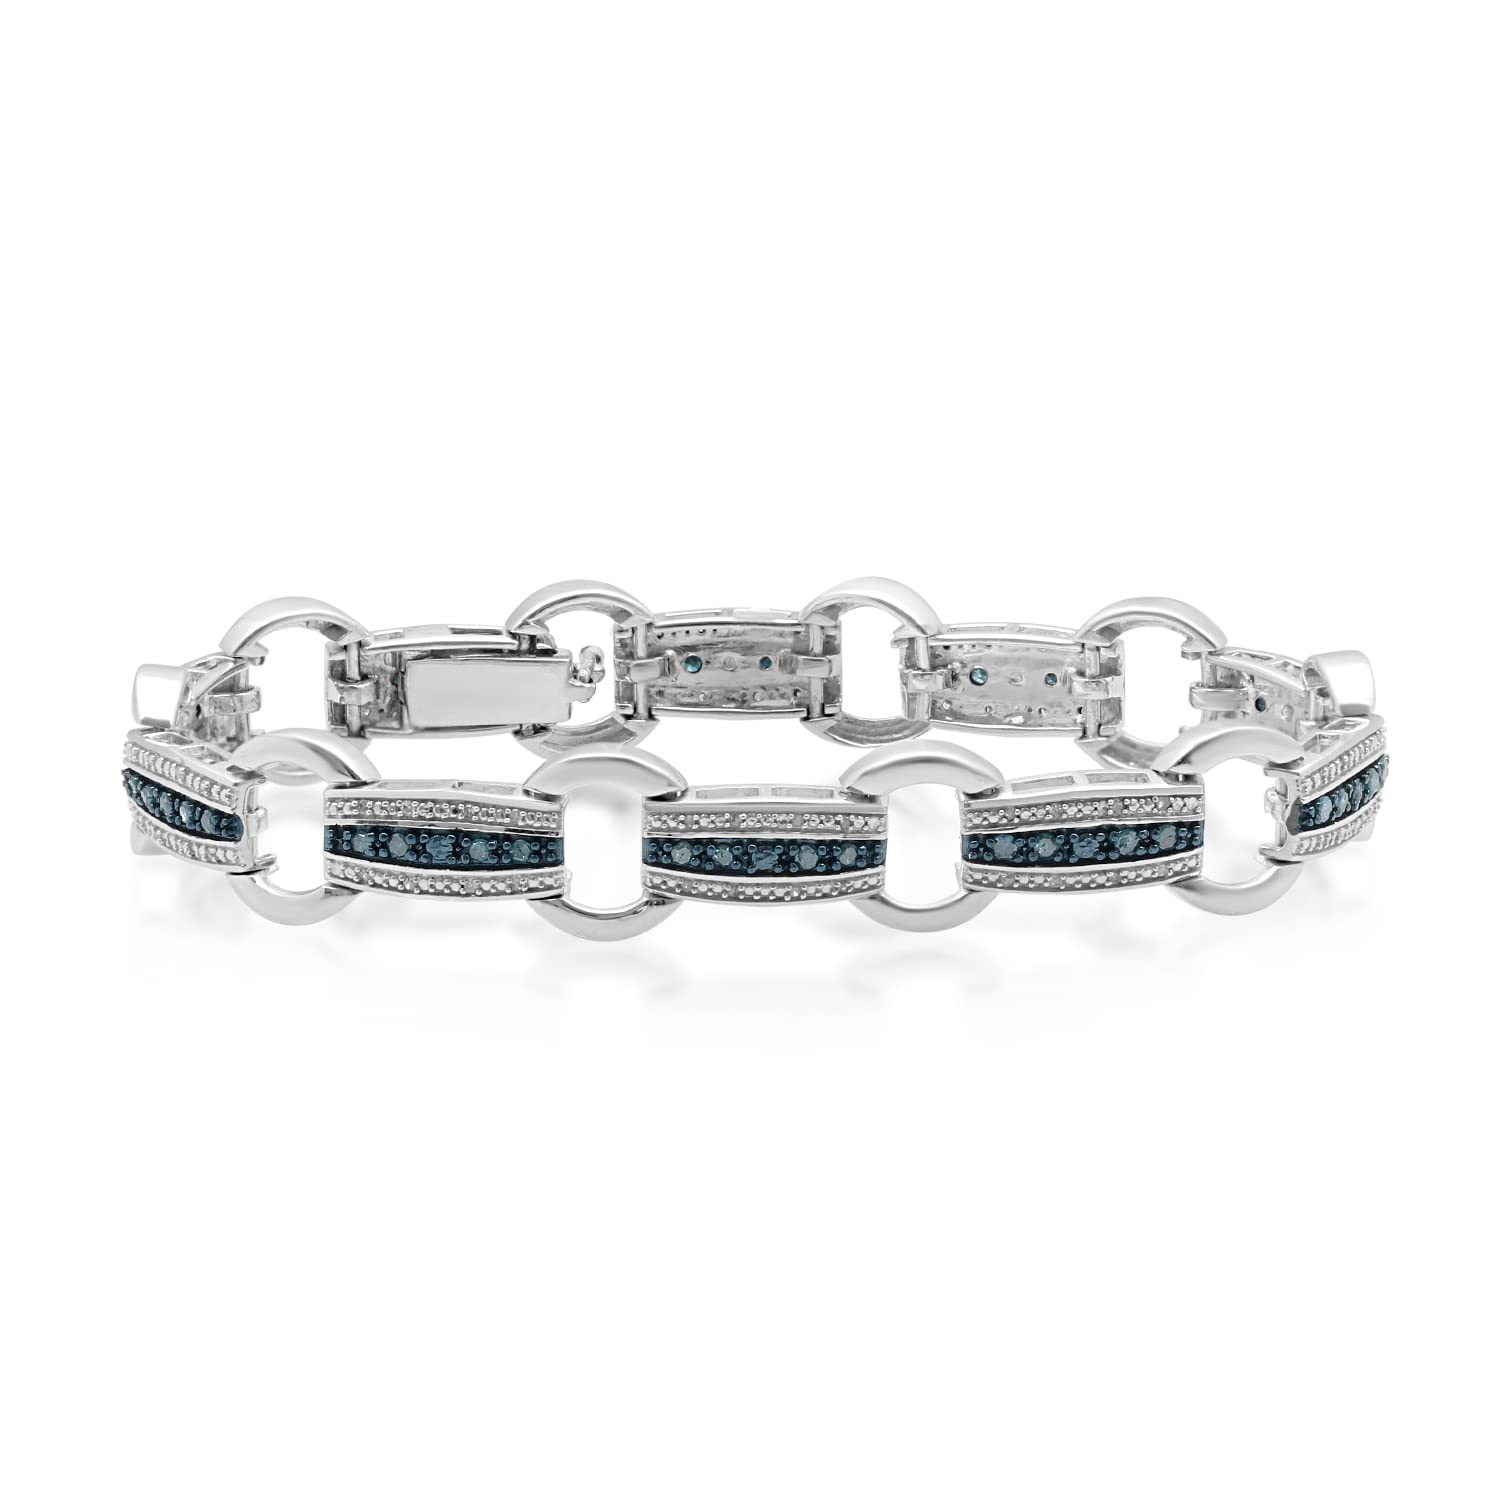 Stella palladium plated silver bracelet for Men